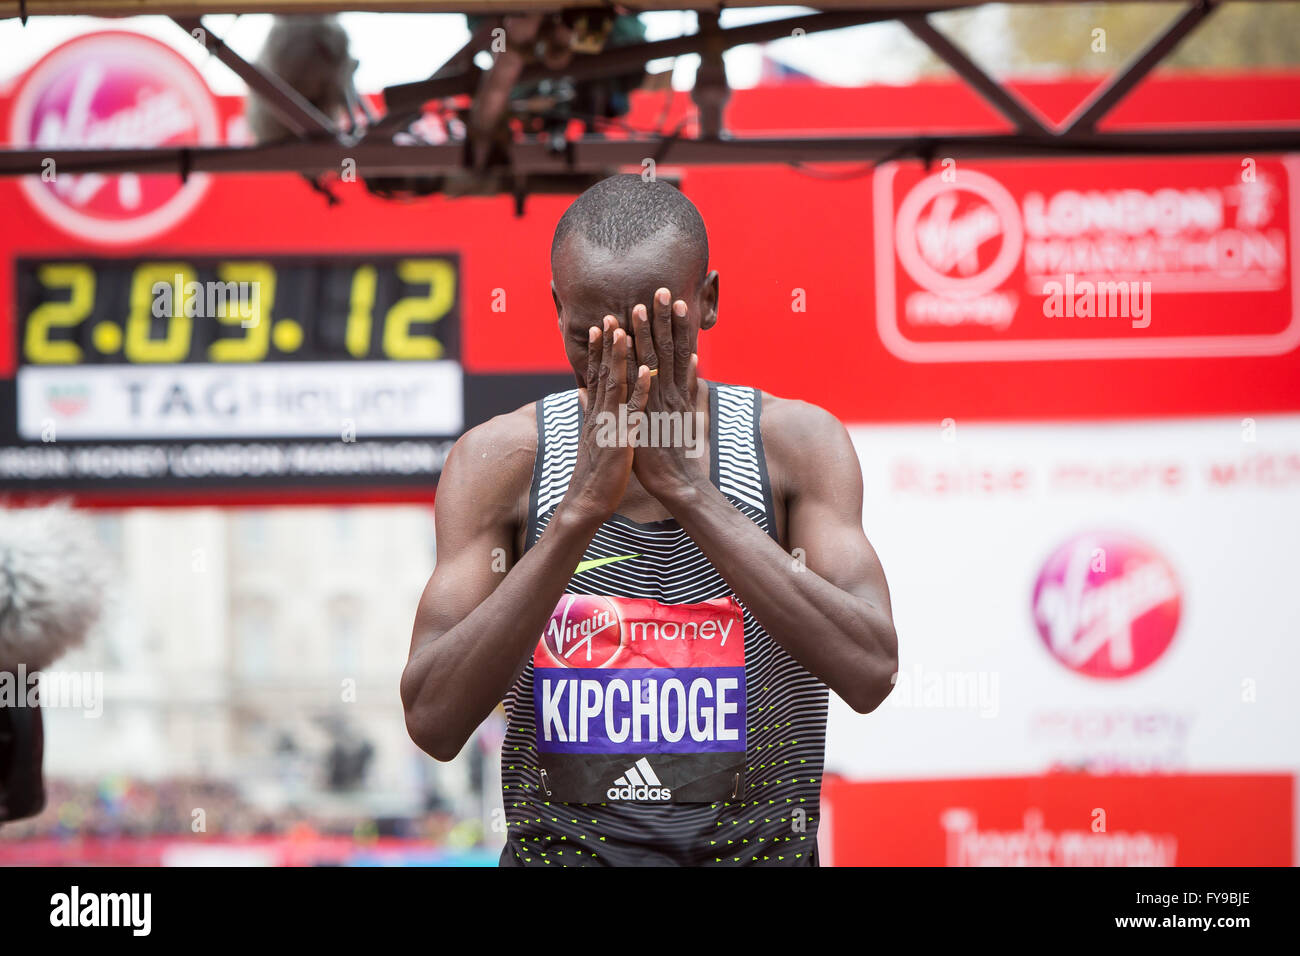 London, UK. 24th Apr, 2016. Men's Elite winner Eliud Kipchoge of Kenya celebrates after the London Marathon 2016 in London, Britain on April 24, 2016. Credit:  Richard Washbrooke/Xinhua/Alamy Live News Stock Photo